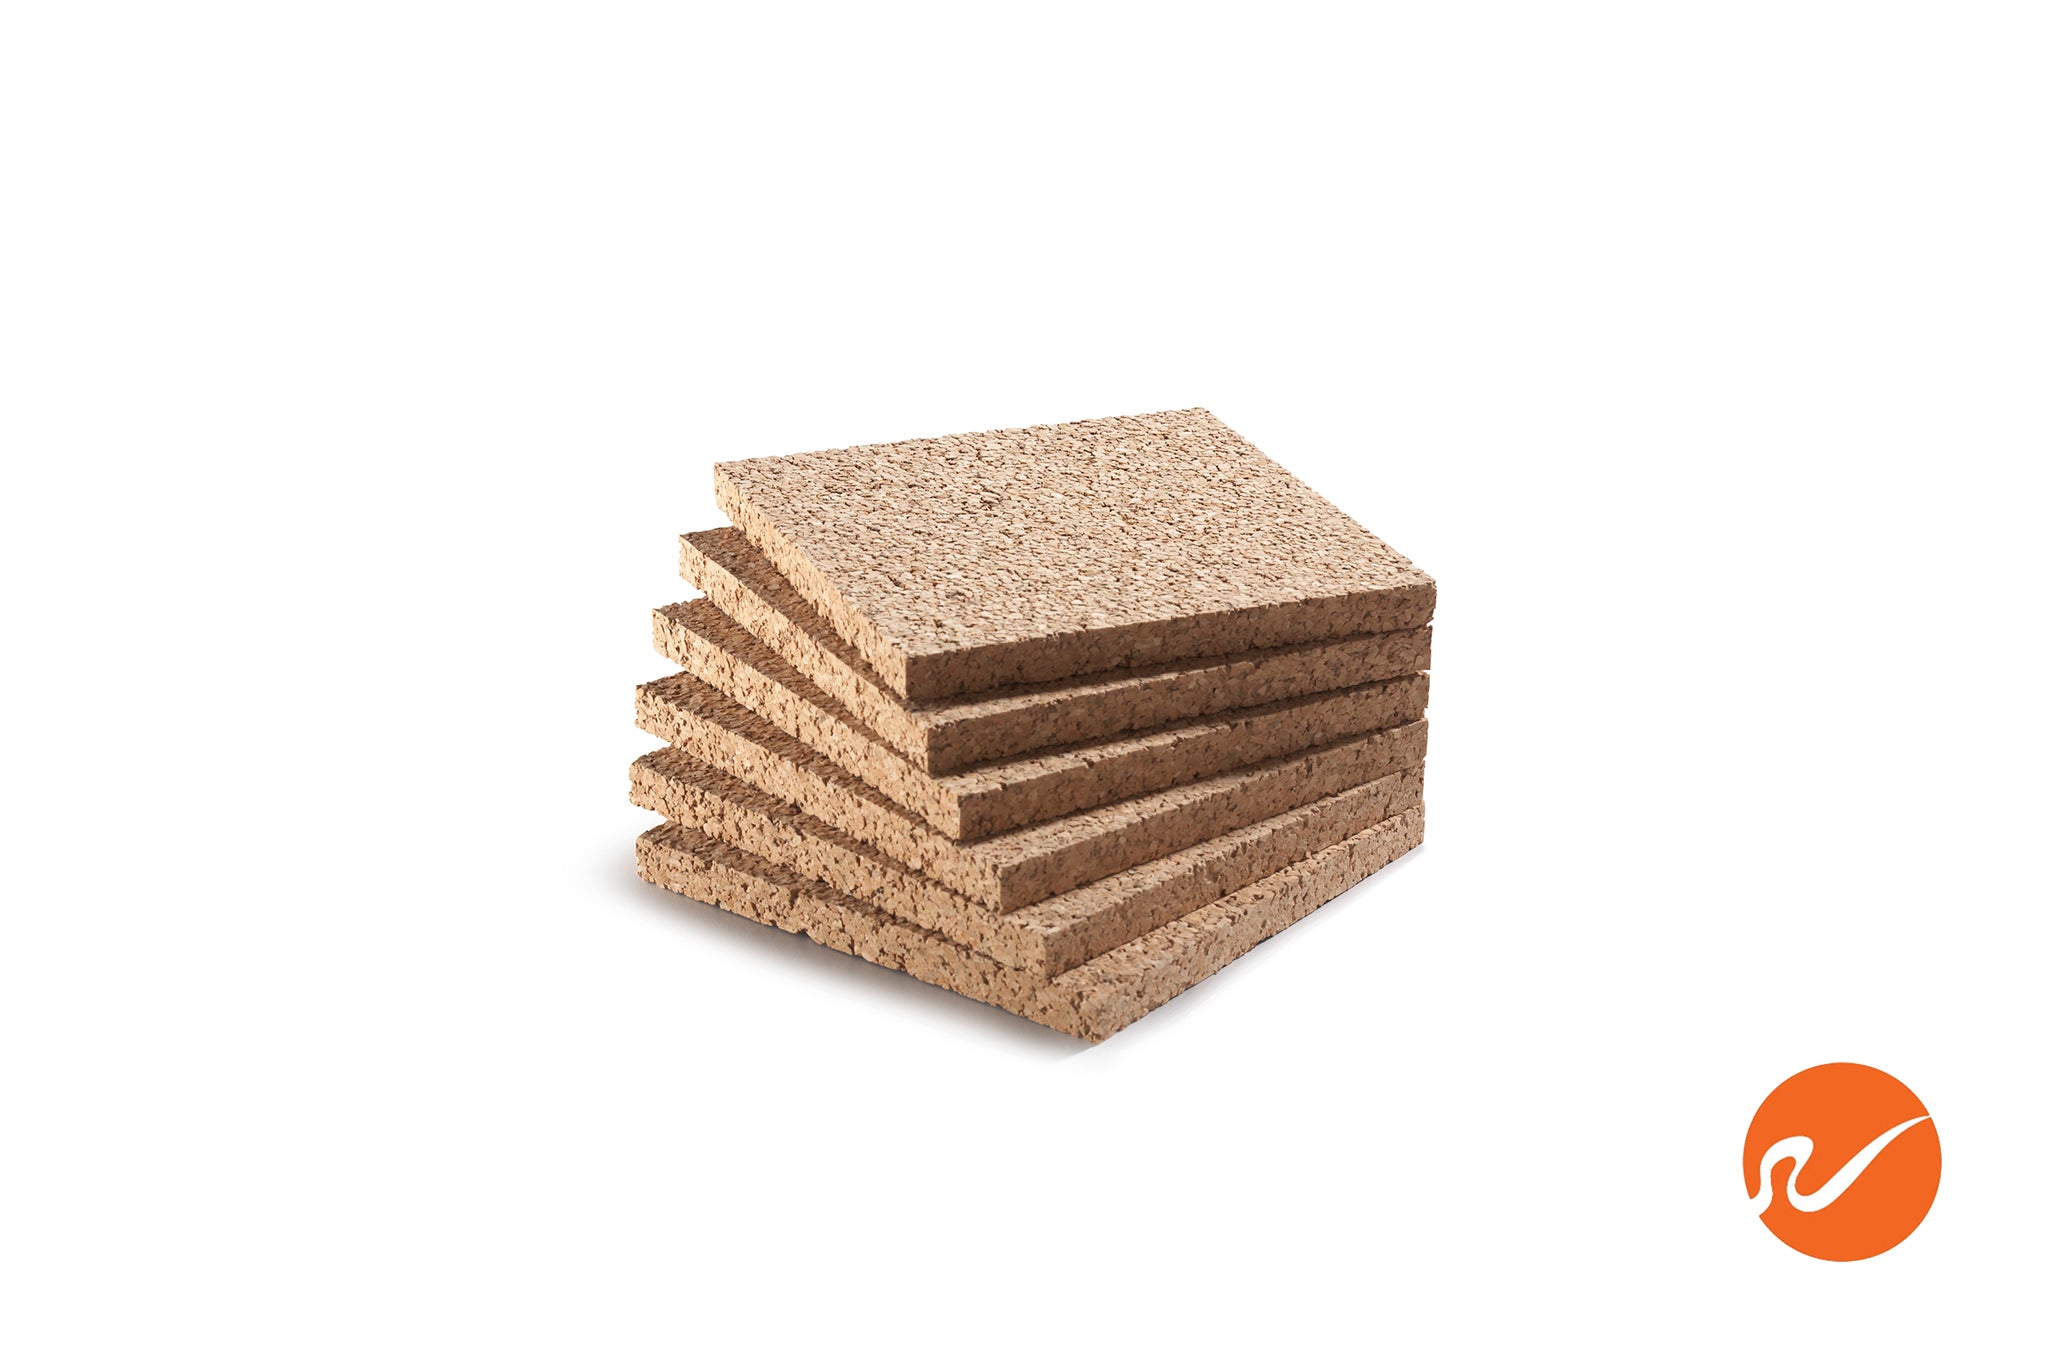 1/2 x 6 Cork Squares - buy cork pads, trivets